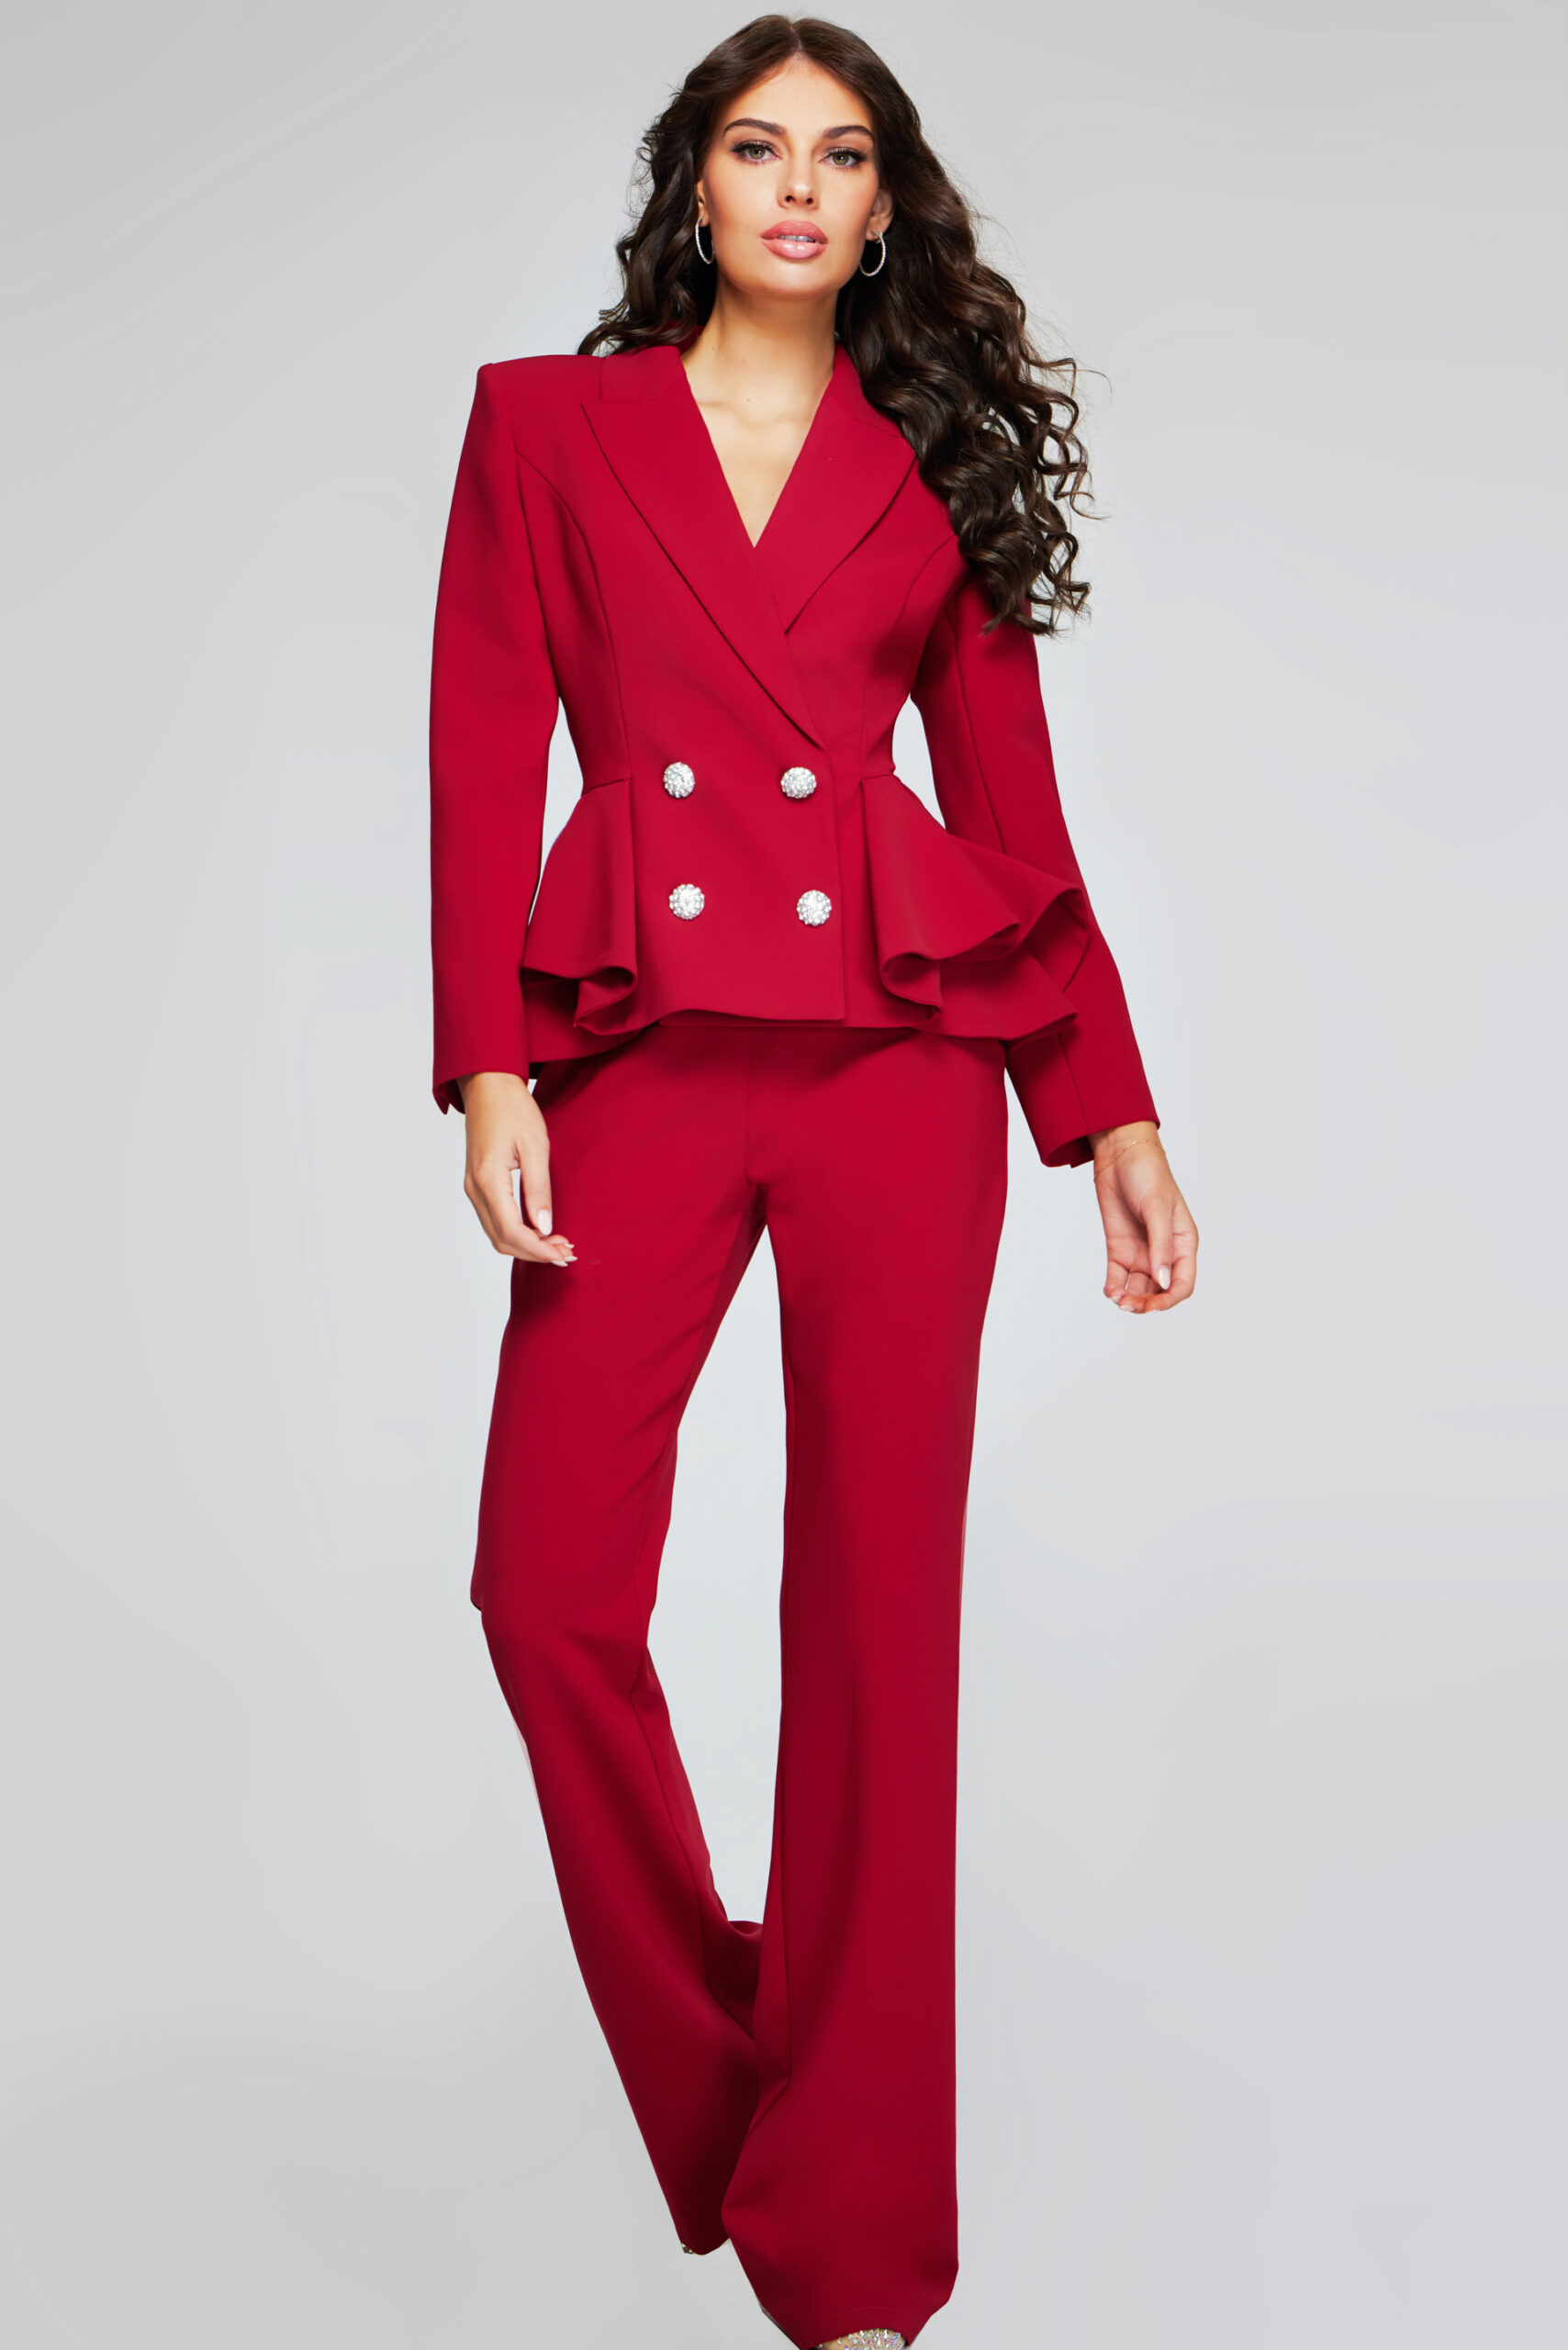 Model wearing Elegant Red Pantsuit 39374